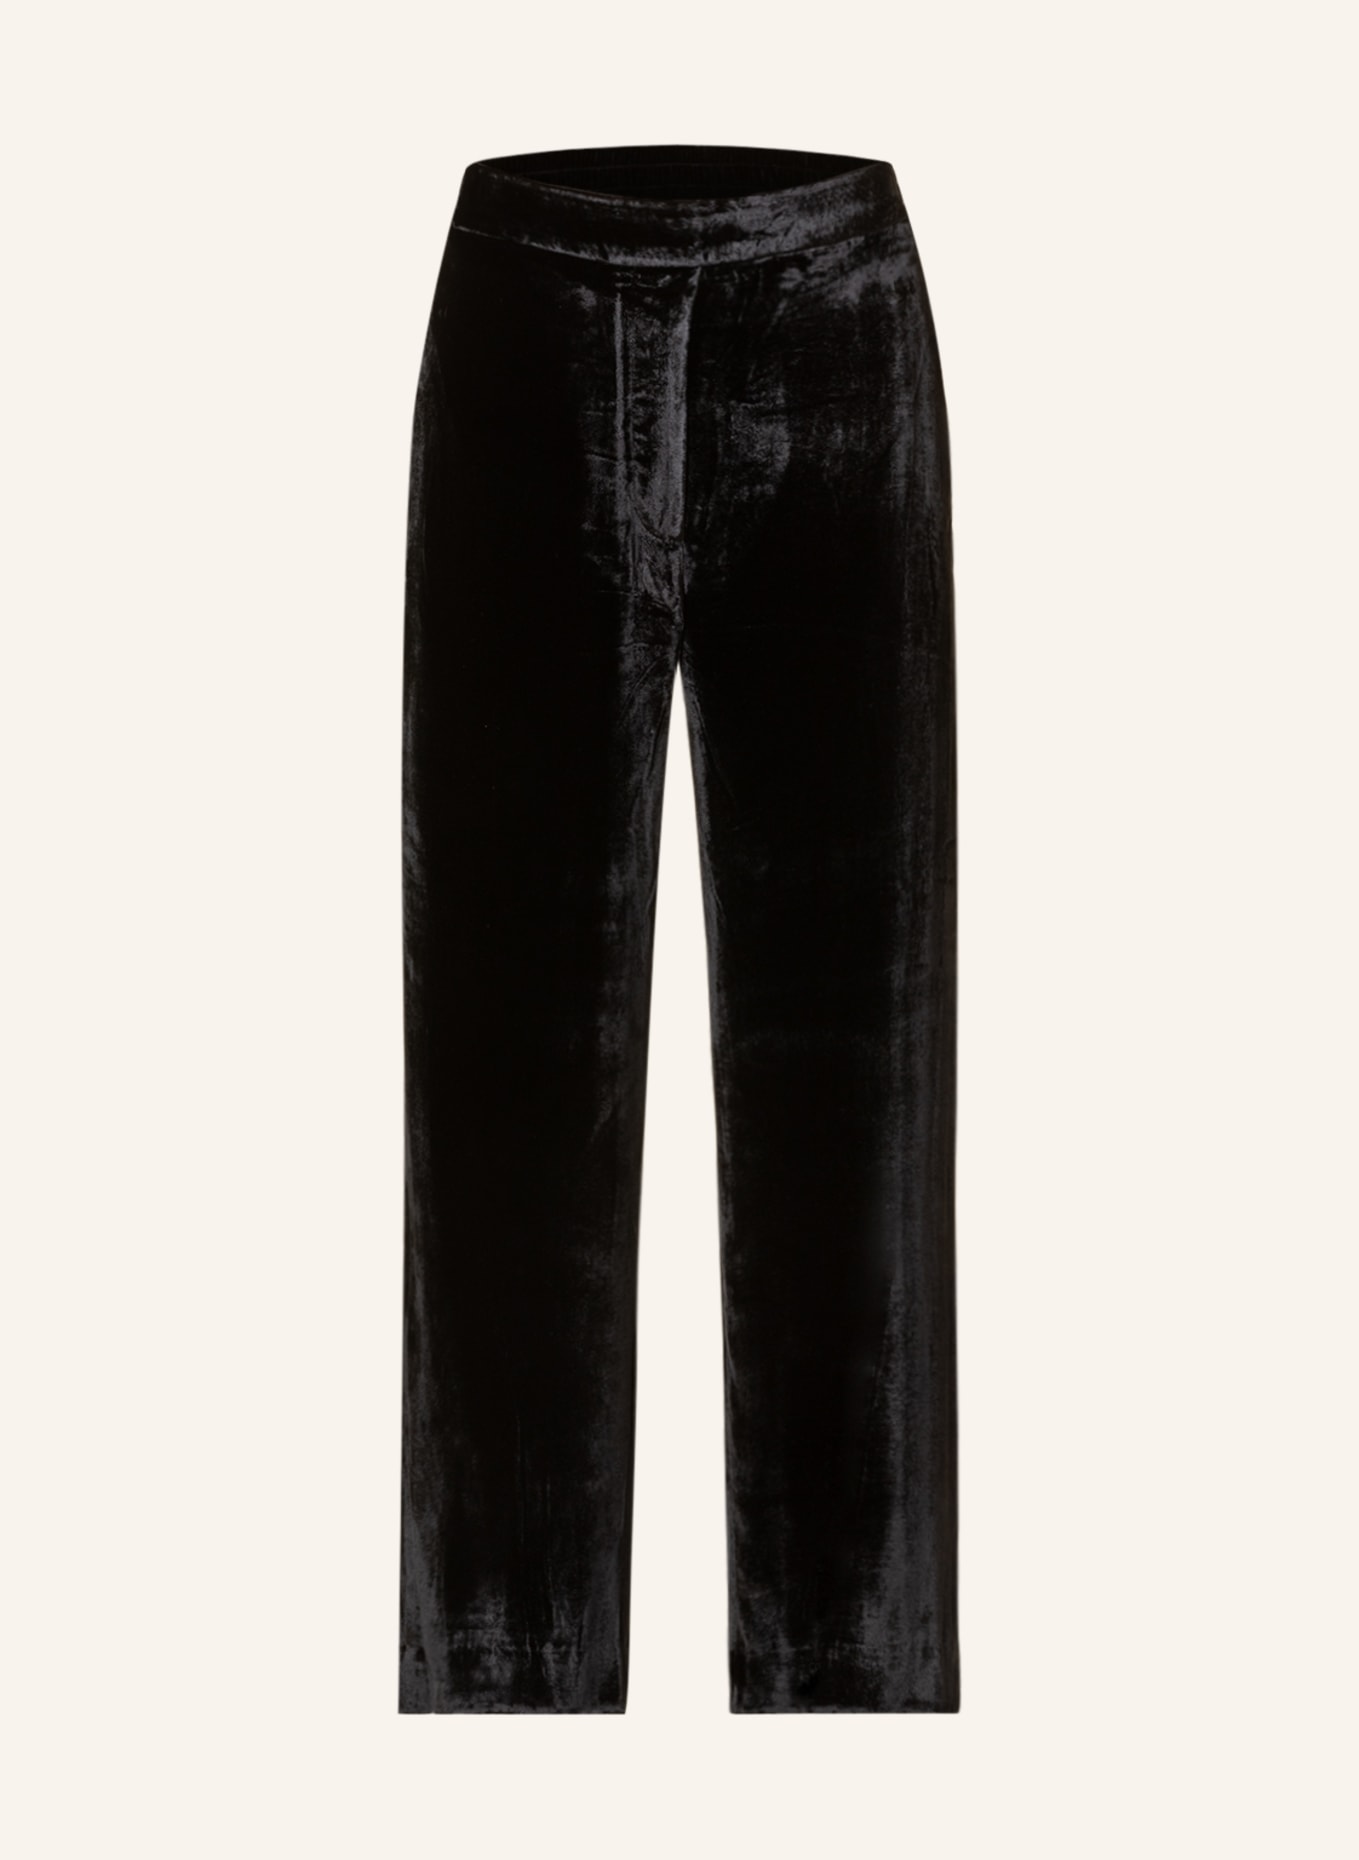 COS Velvet pants in jogger style in black